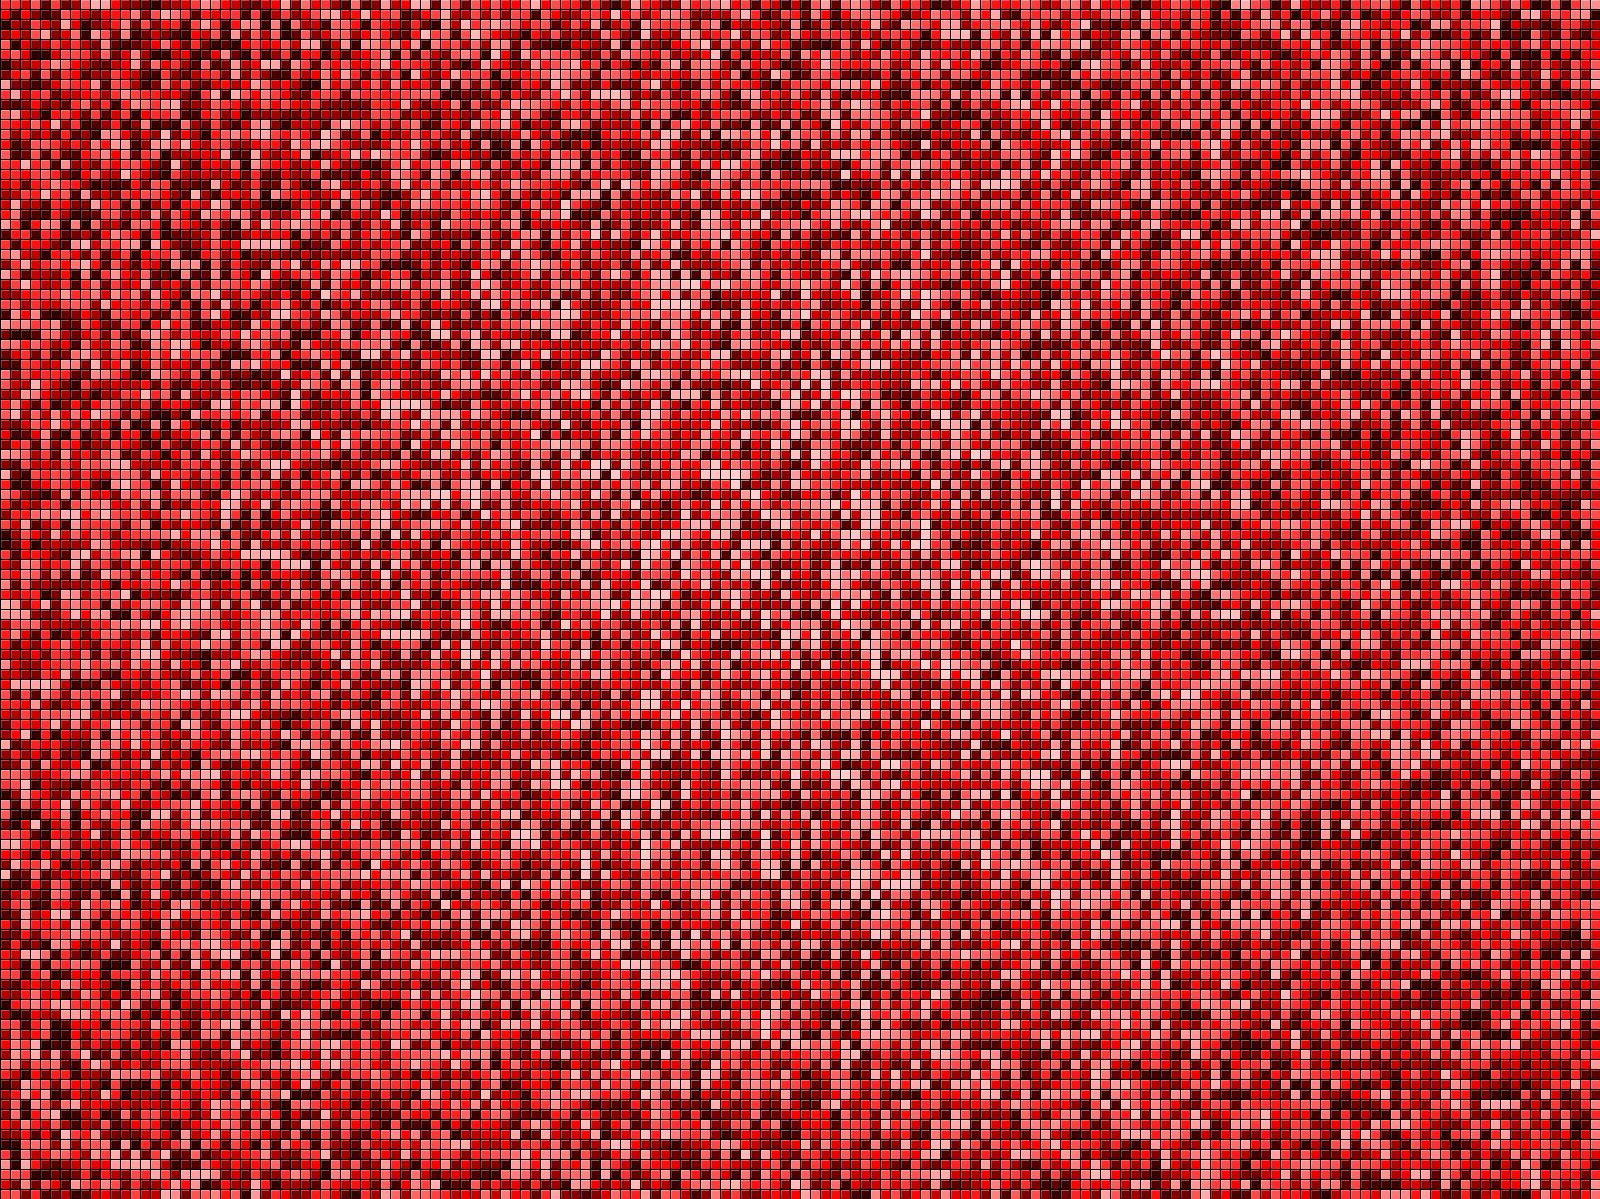 Red Pixel Tile Wallpaper By Snakkez